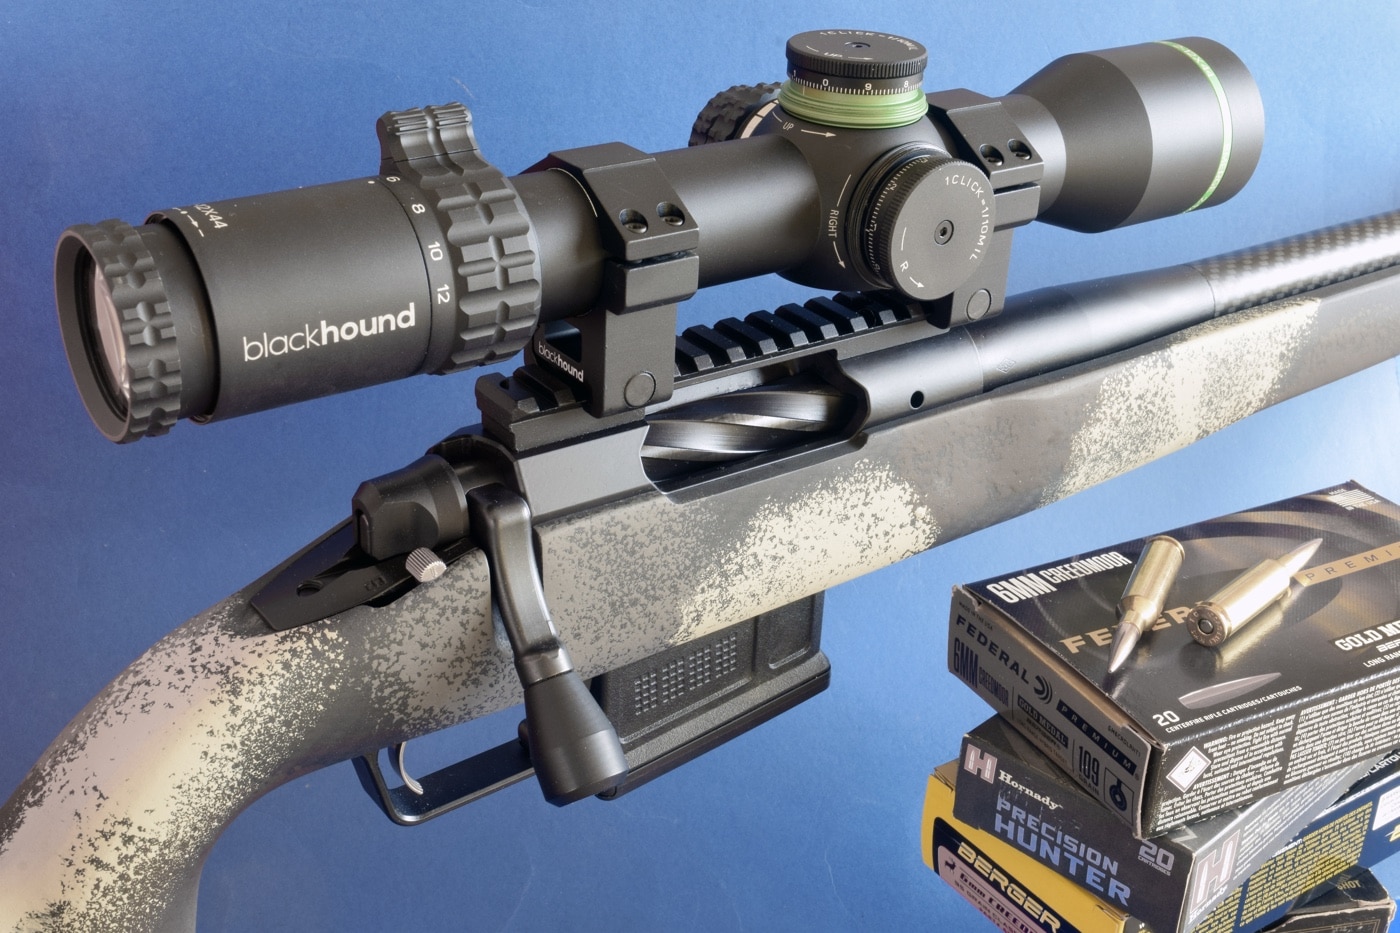 mounted blackhound scope on waypoint rifle